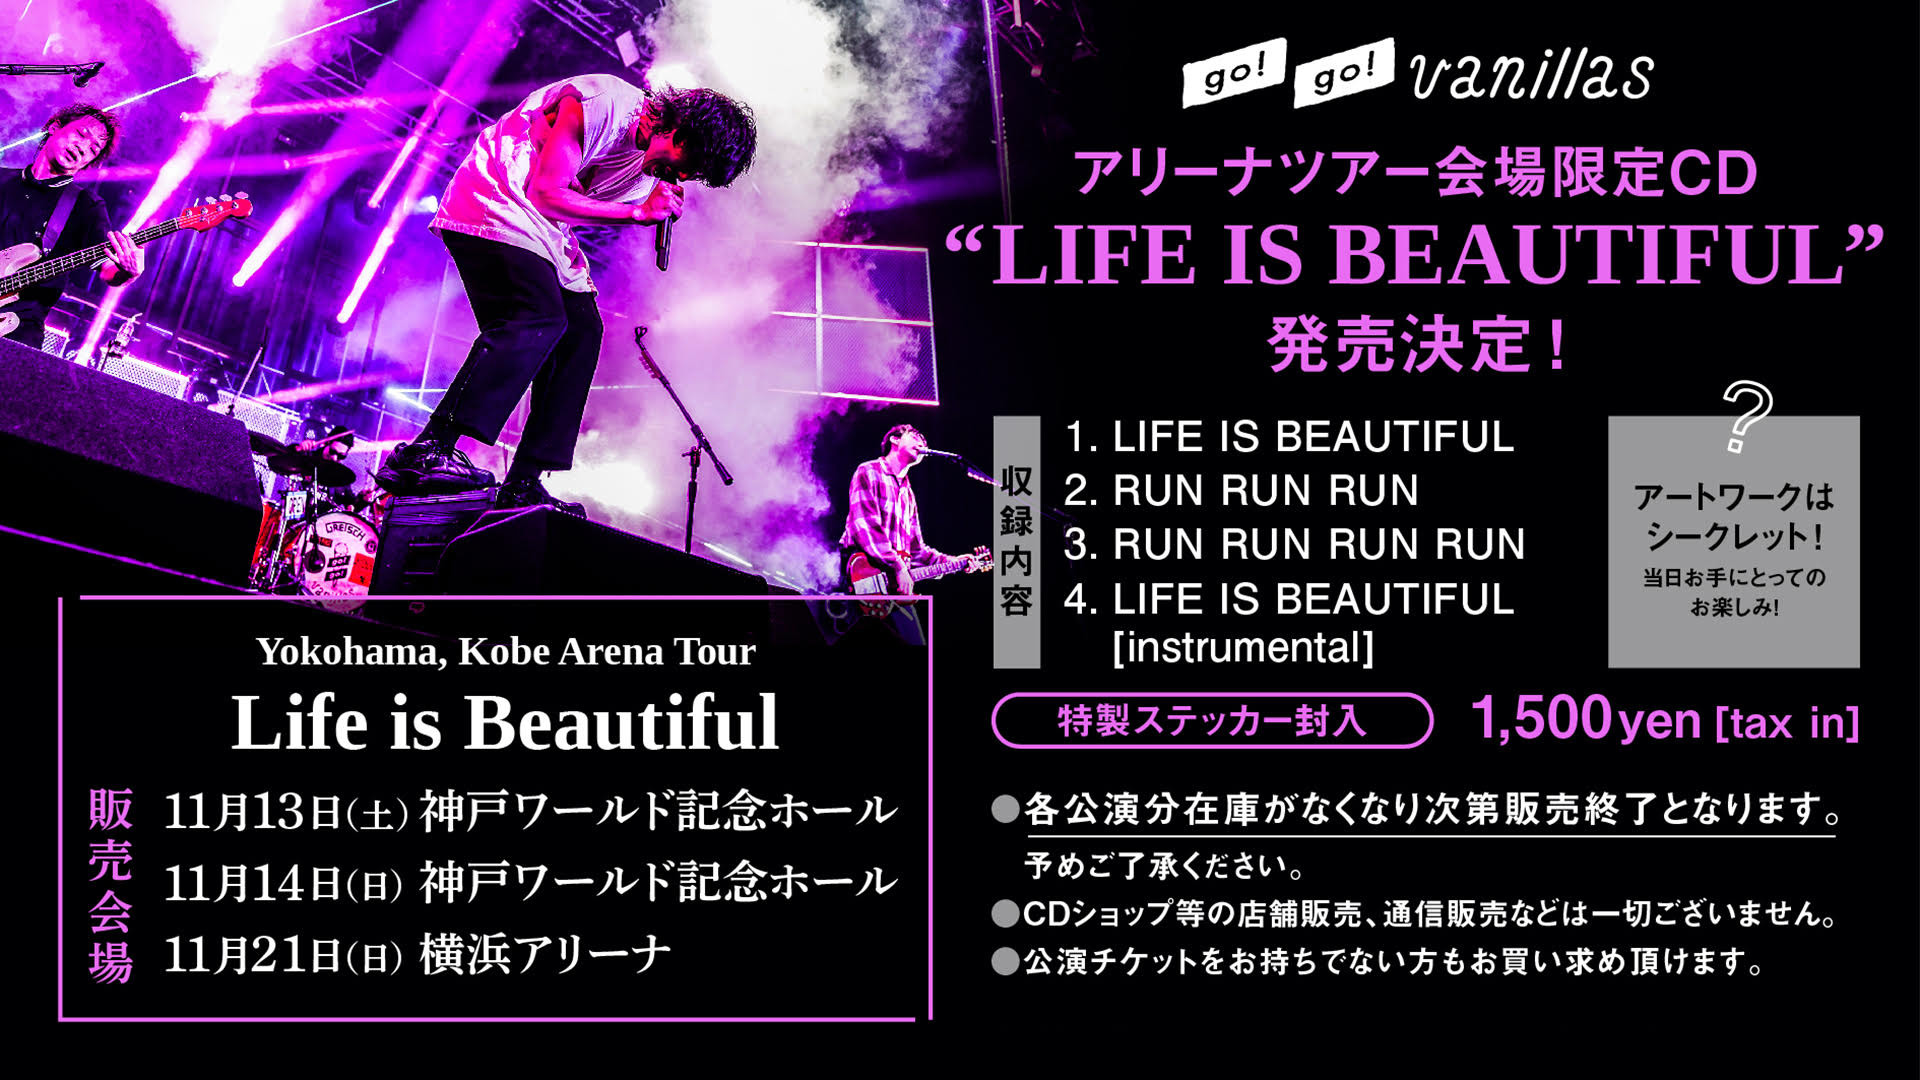 Yokohama, Kobe Arena Tour 「Life Is Beautiful」｜go!go!vanillas